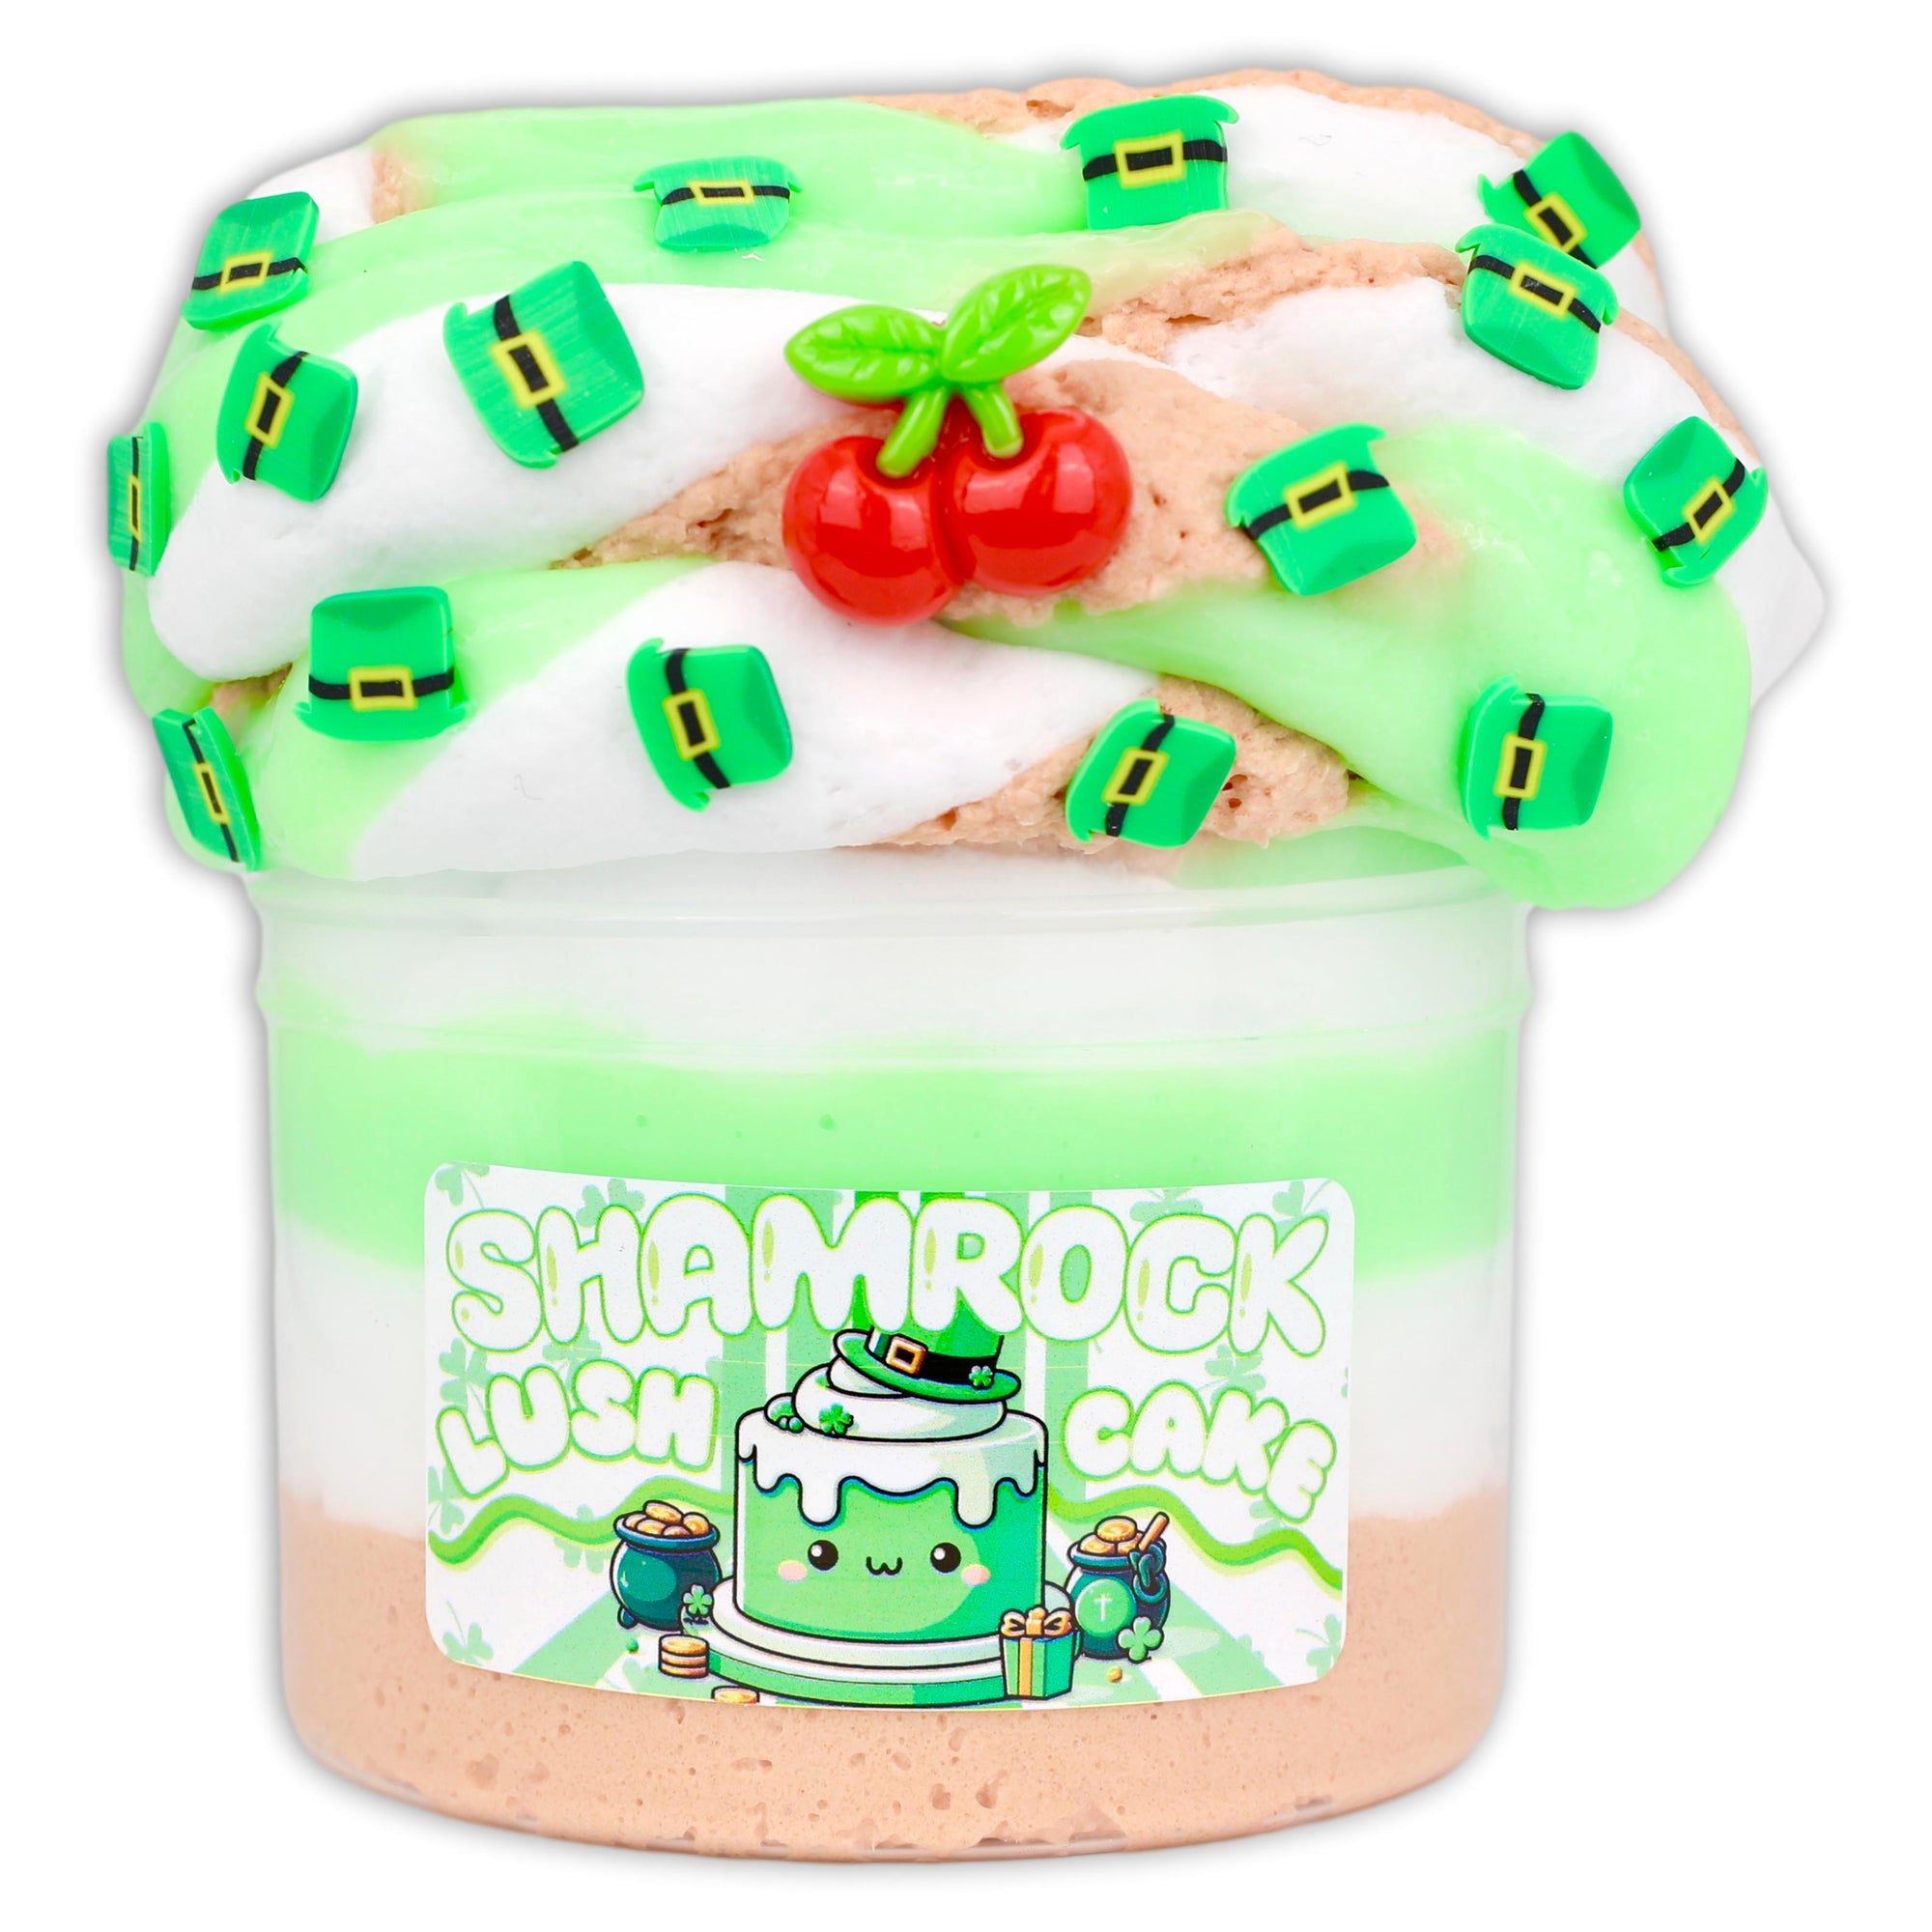 Shamrock Lush Cake Slime - Shop St Patrick's Slime - Dope Slimes